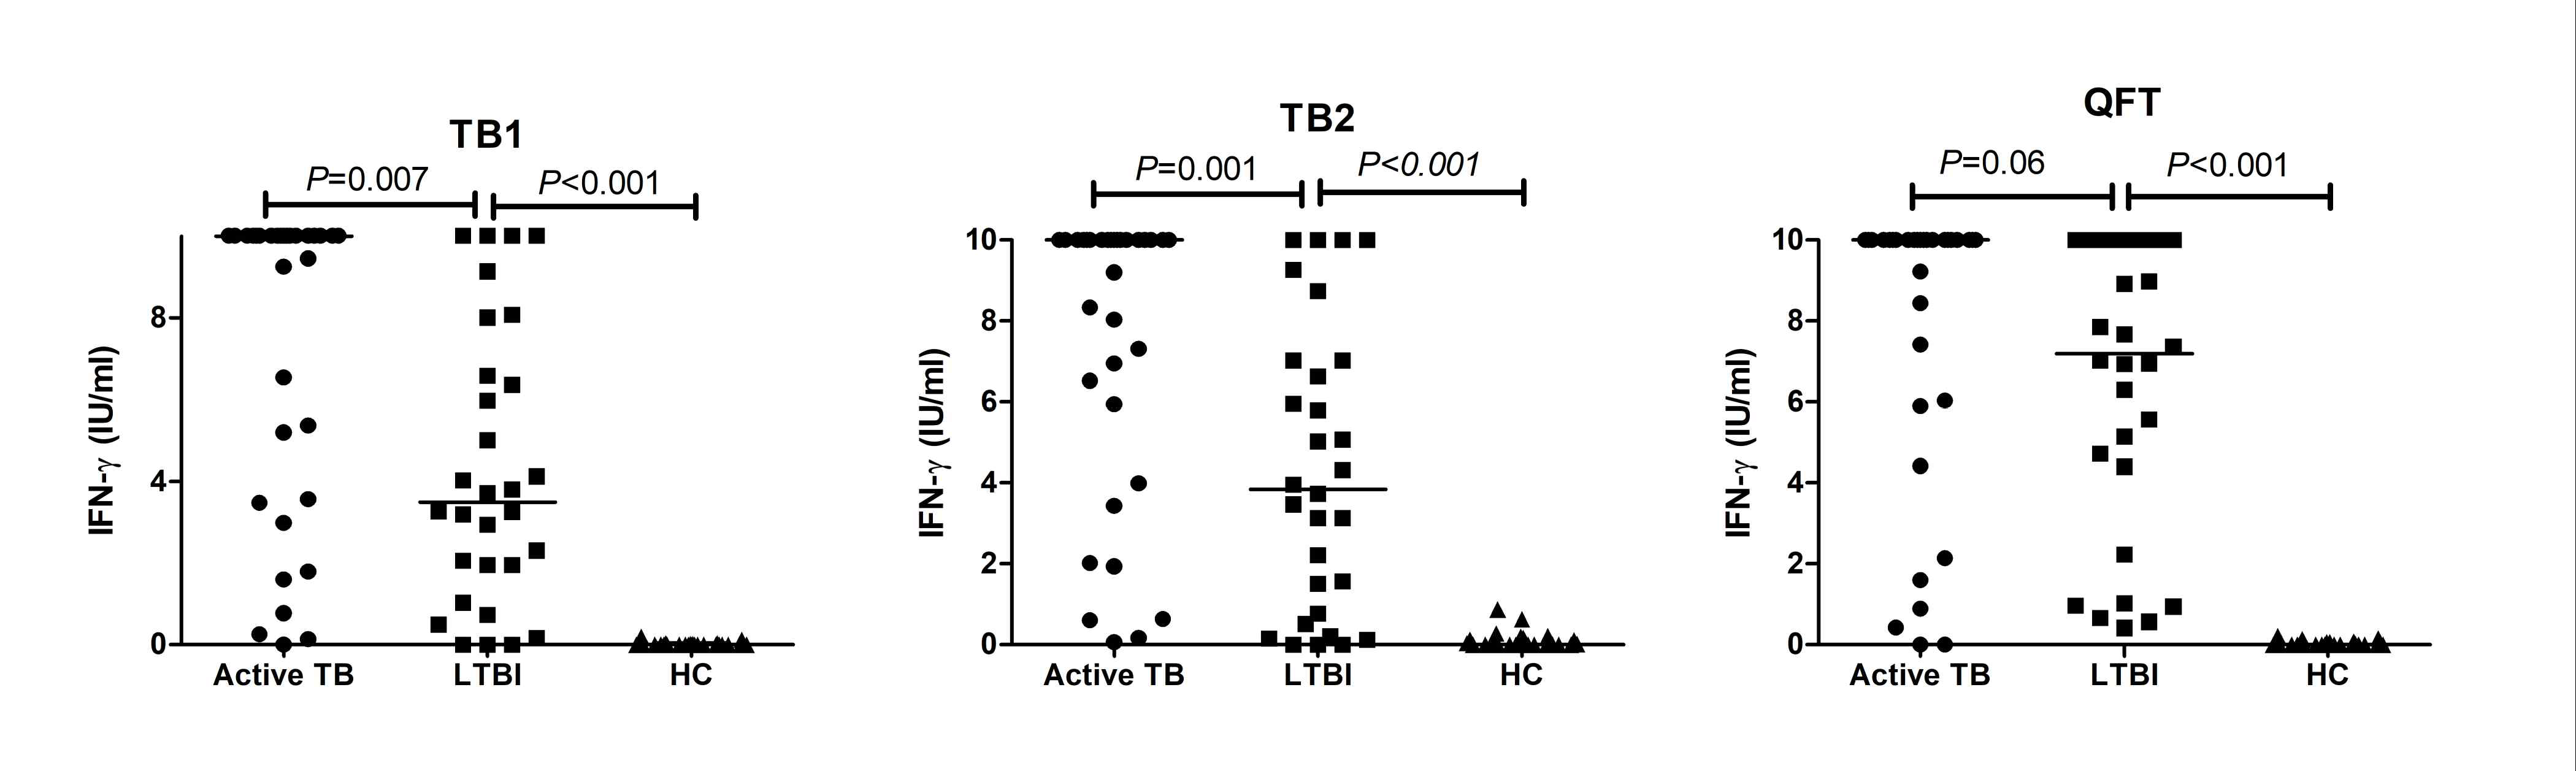 IFN-γ responses in active TB, LTBI and HC (TB1/TB2: QFT-Plus, QFT: QFT-GIT)